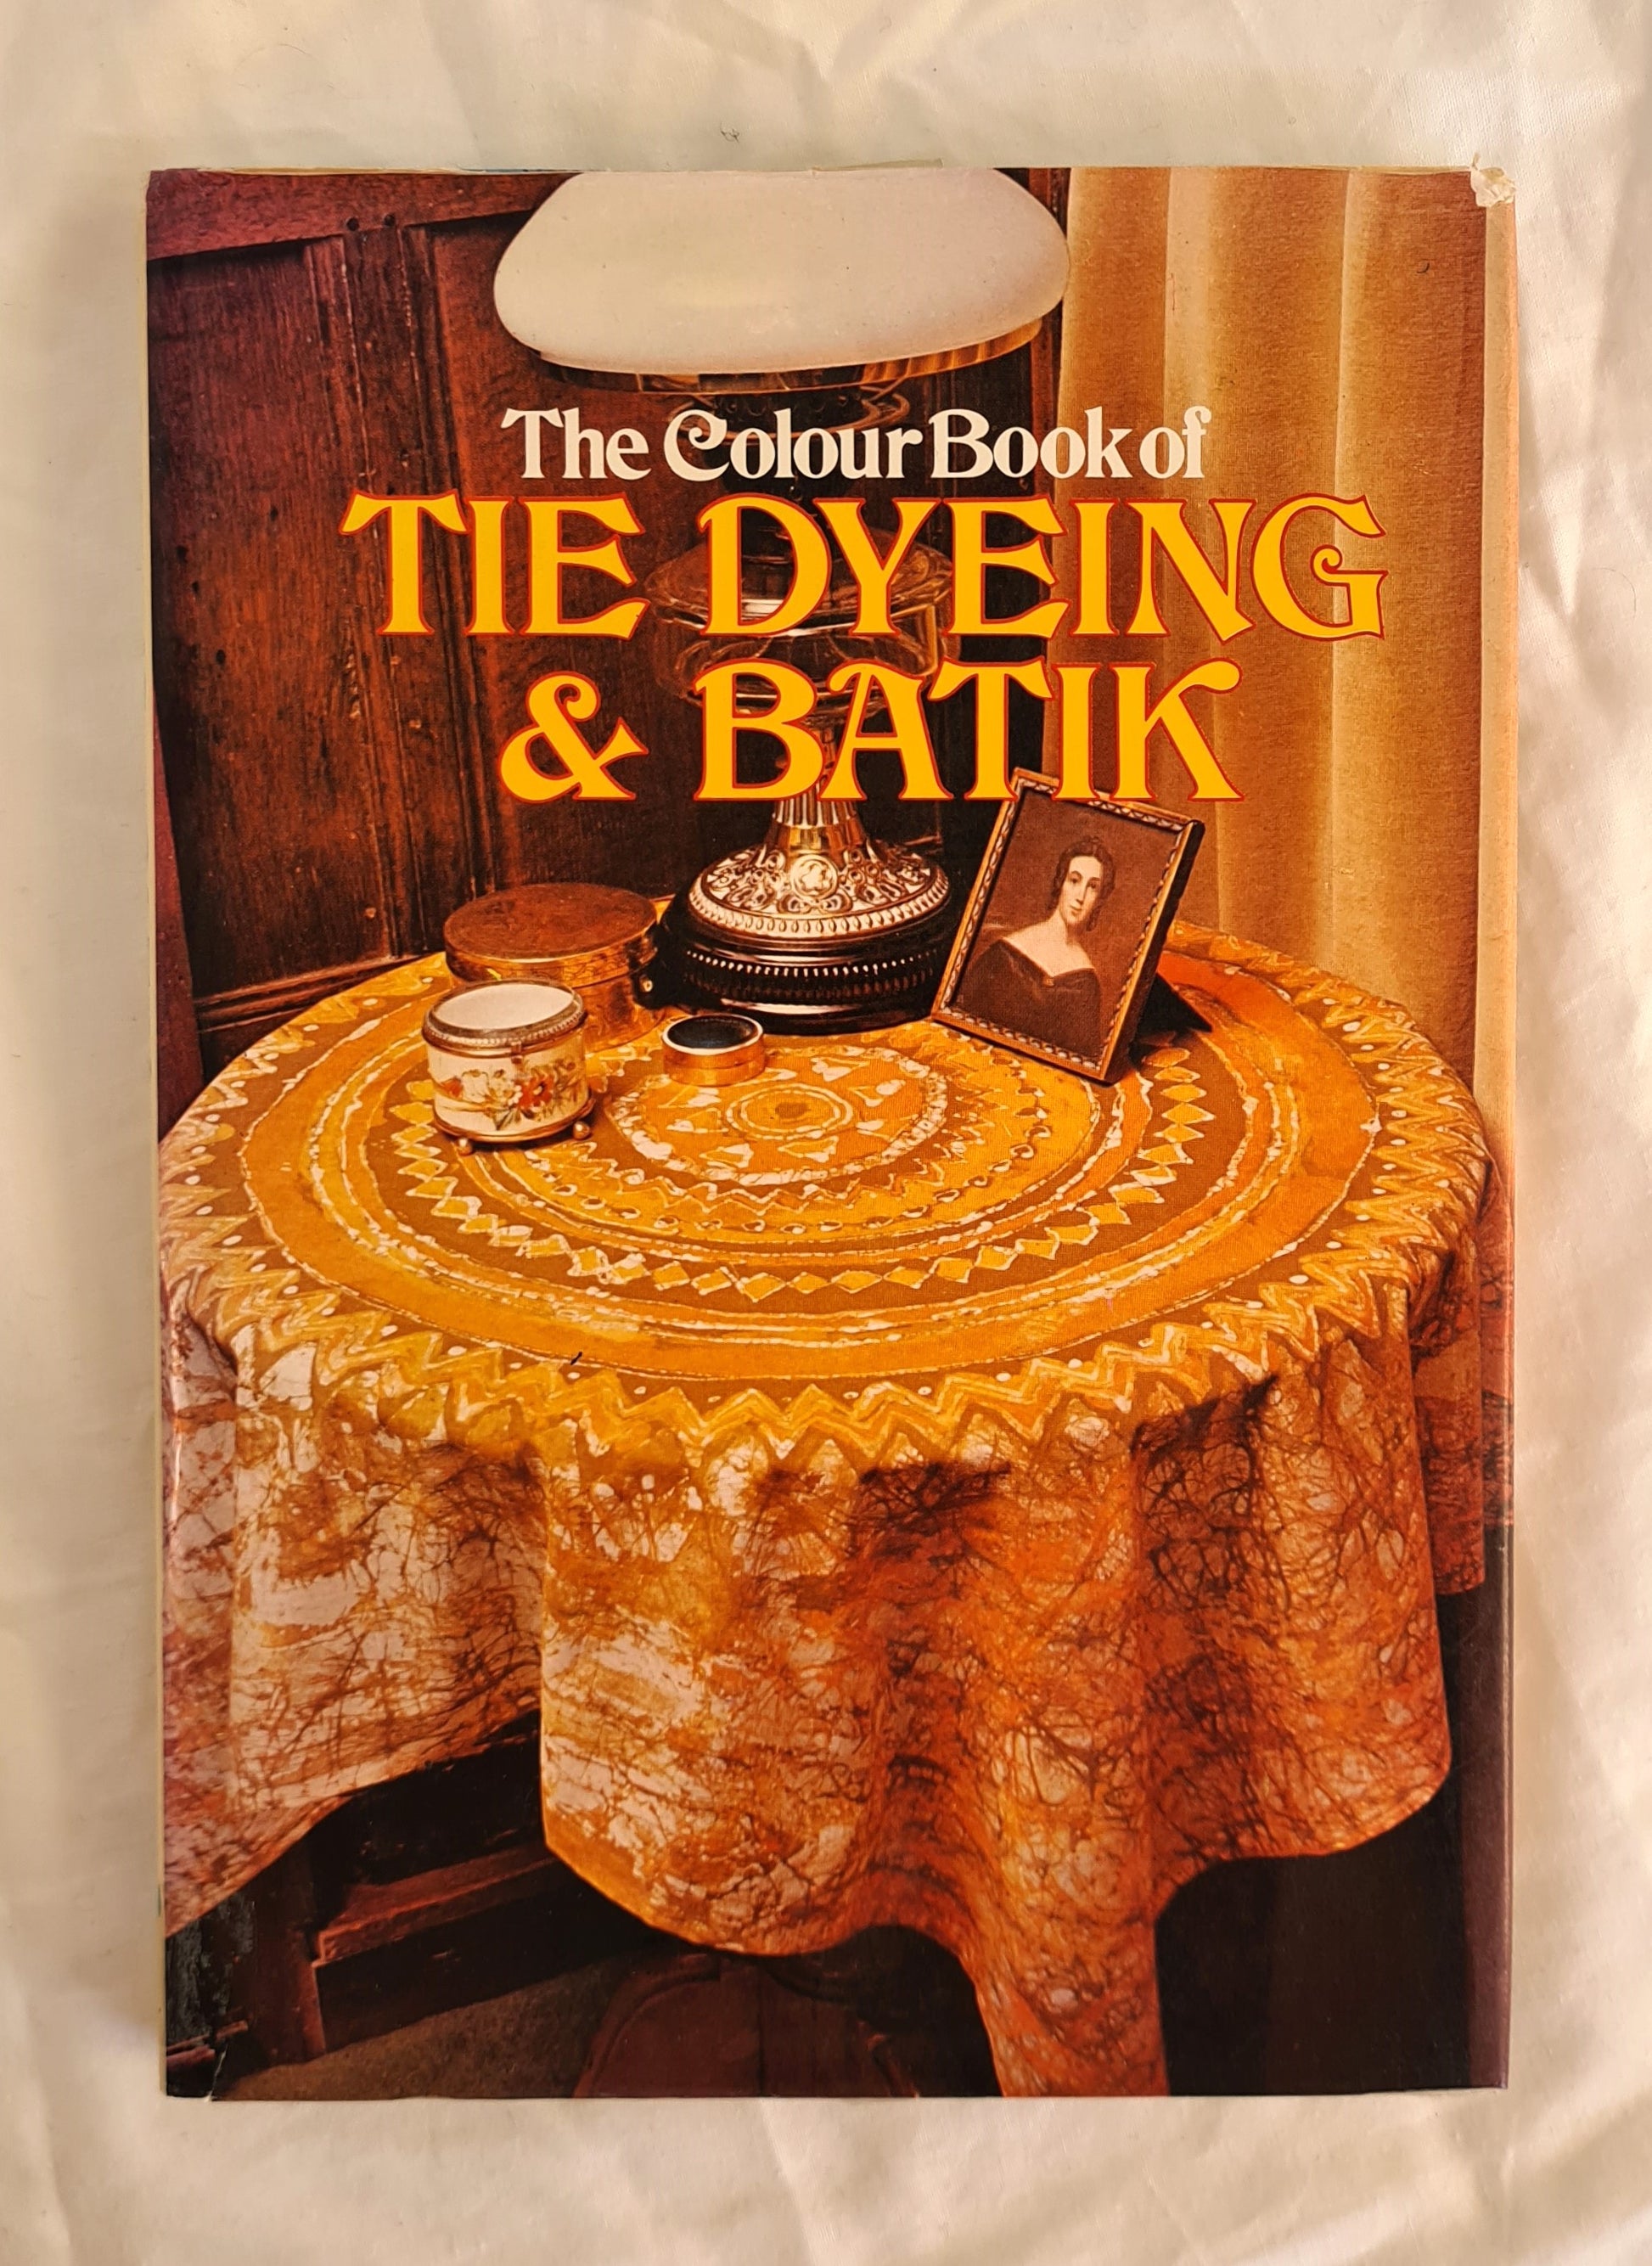 Tie Dyeing & Batik by Fay Anderson